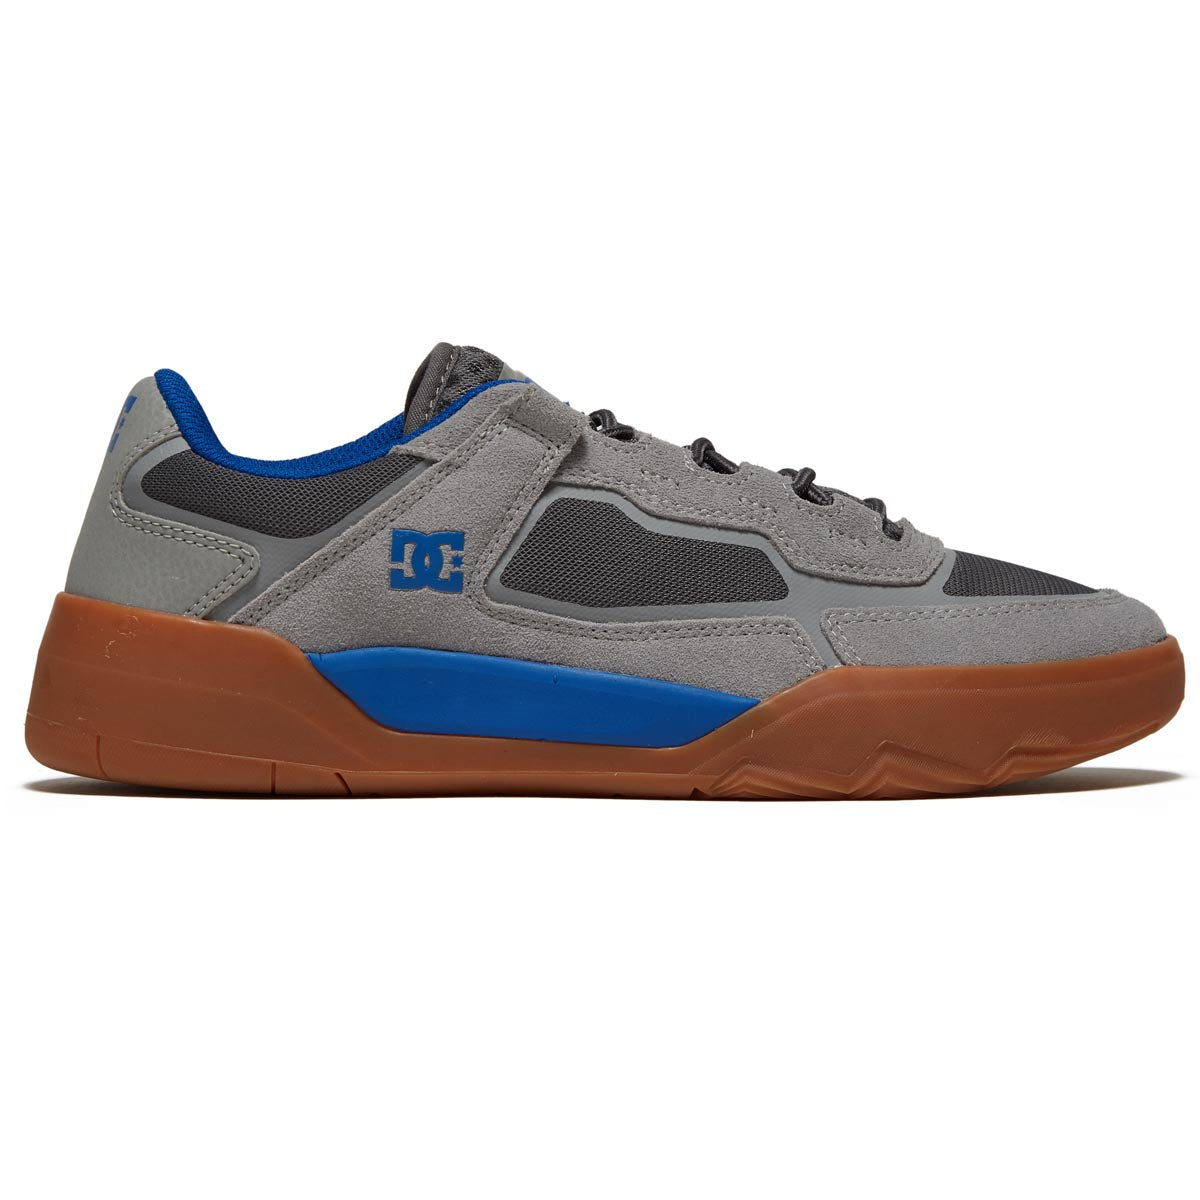 DC Metric S Shoes - Grey/Gum image 1